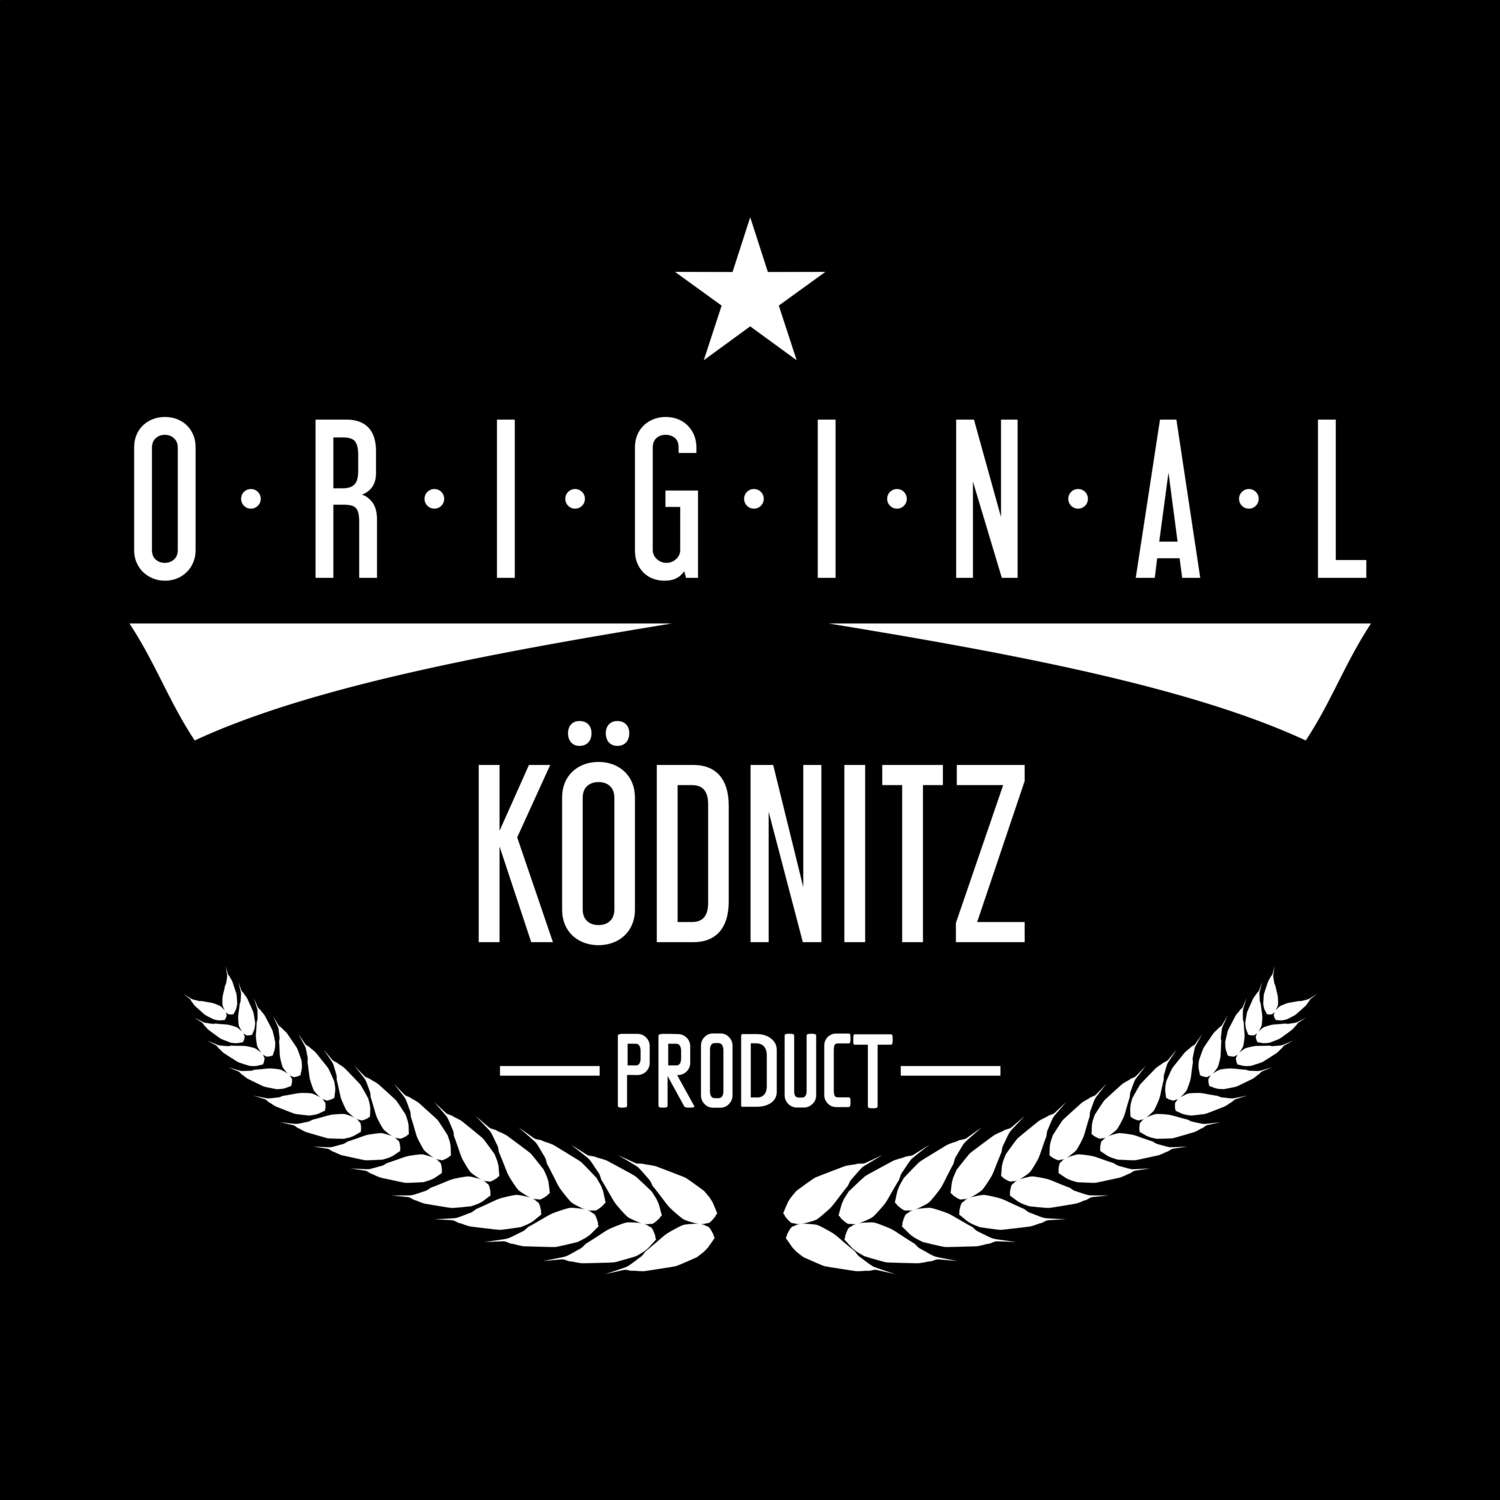 Ködnitz T-Shirt »Original Product«